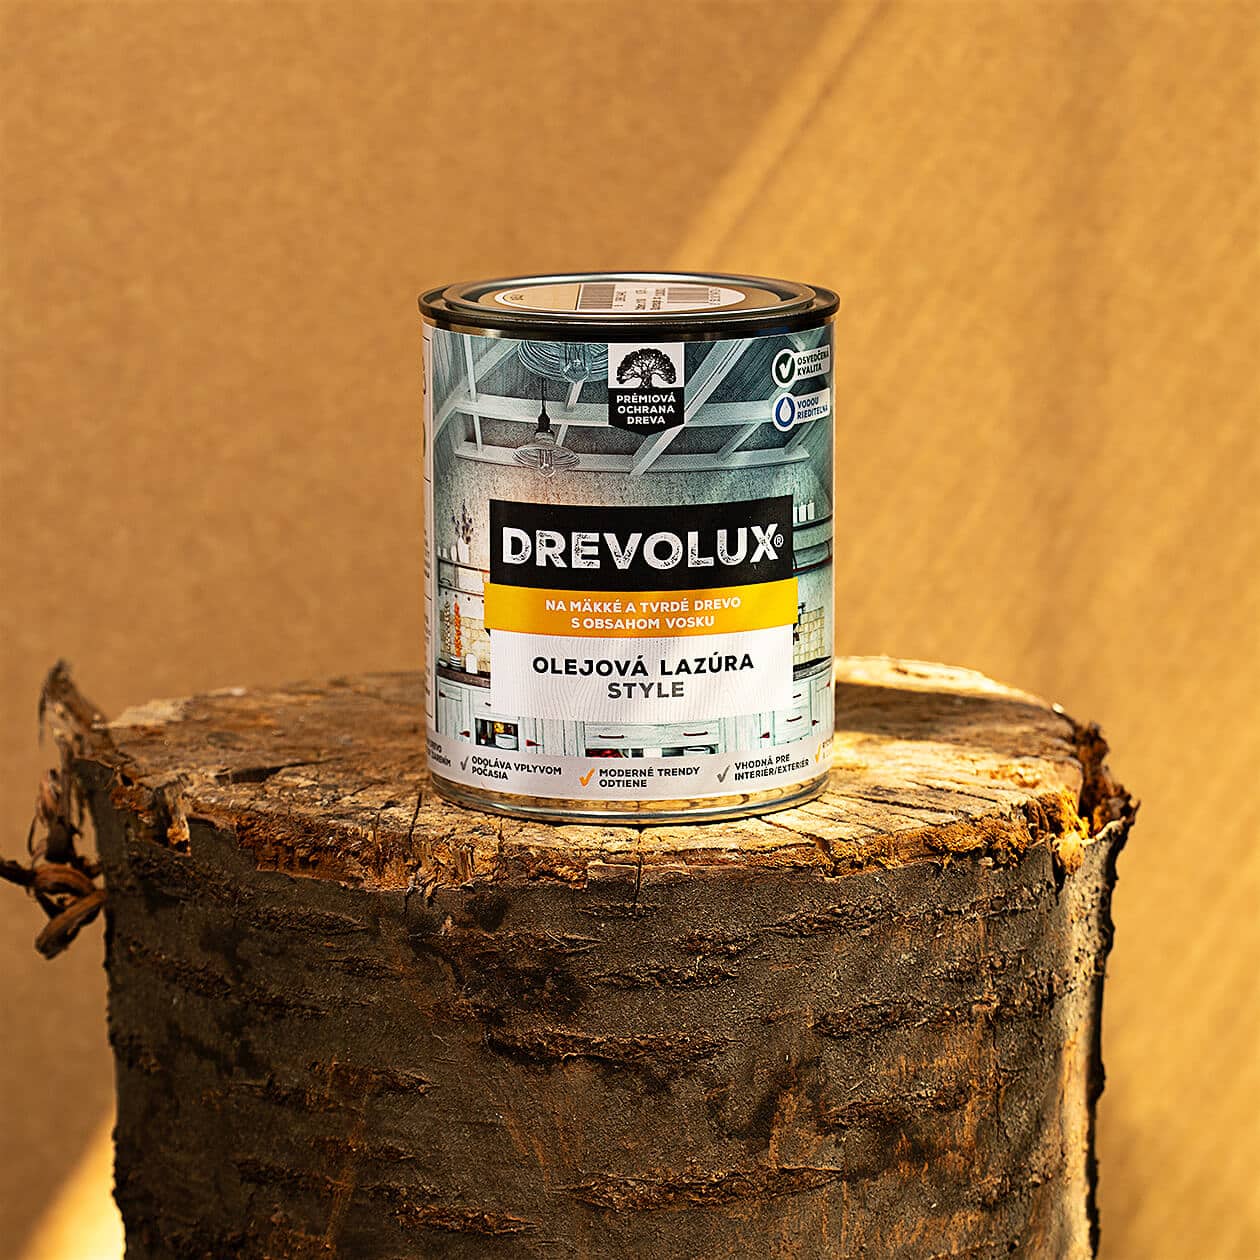 drevolux packaging